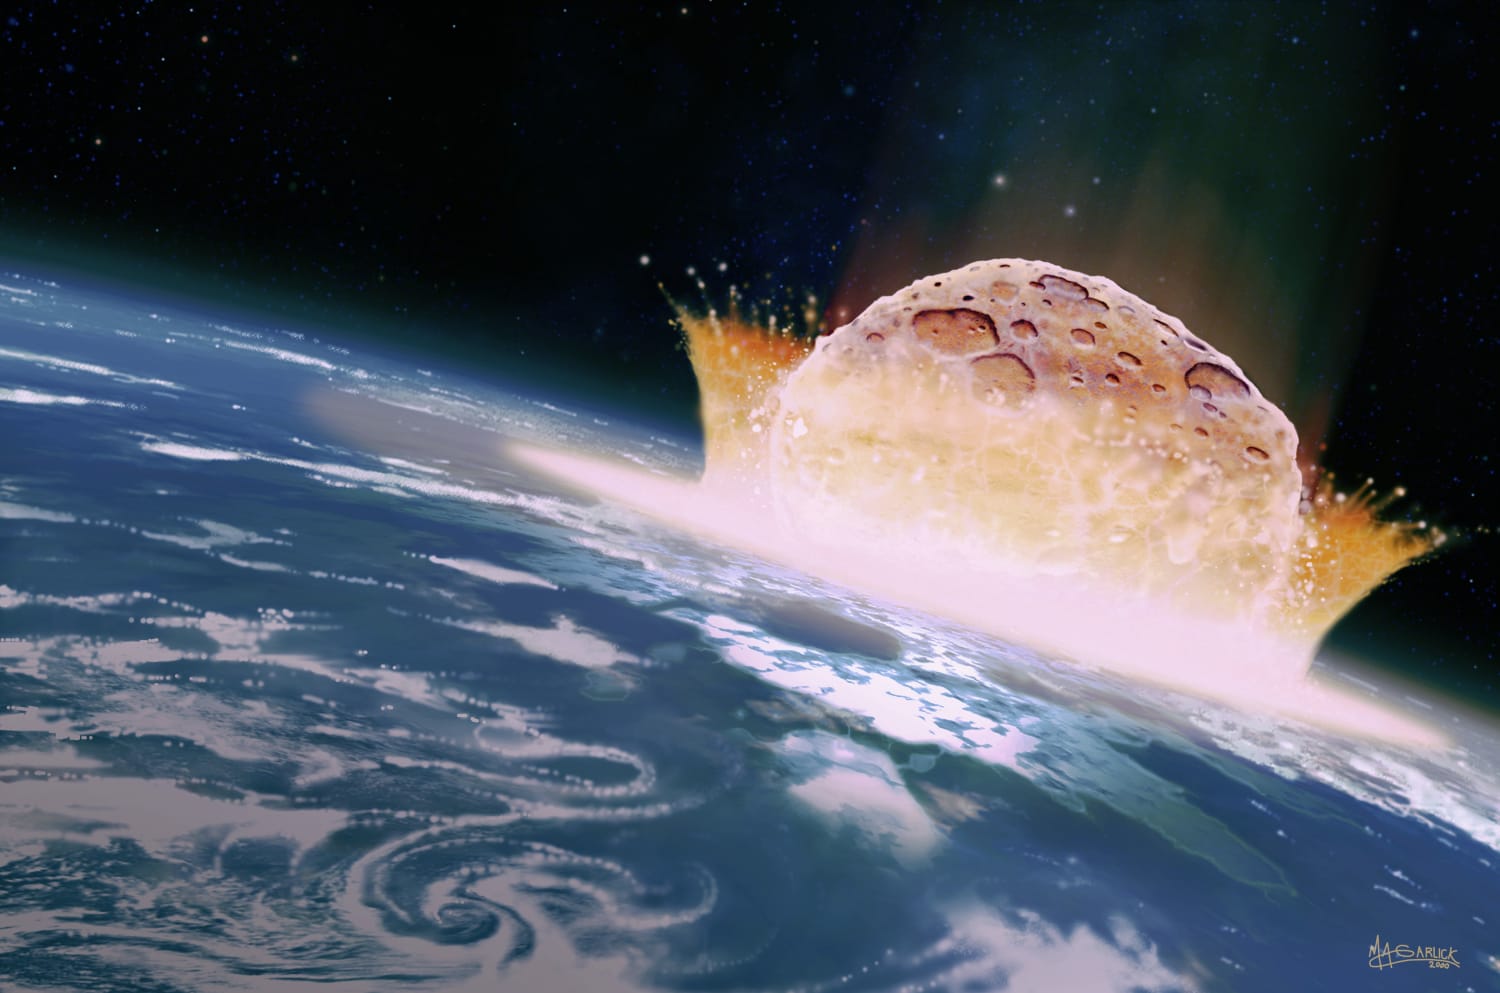 asteroid collision simulator